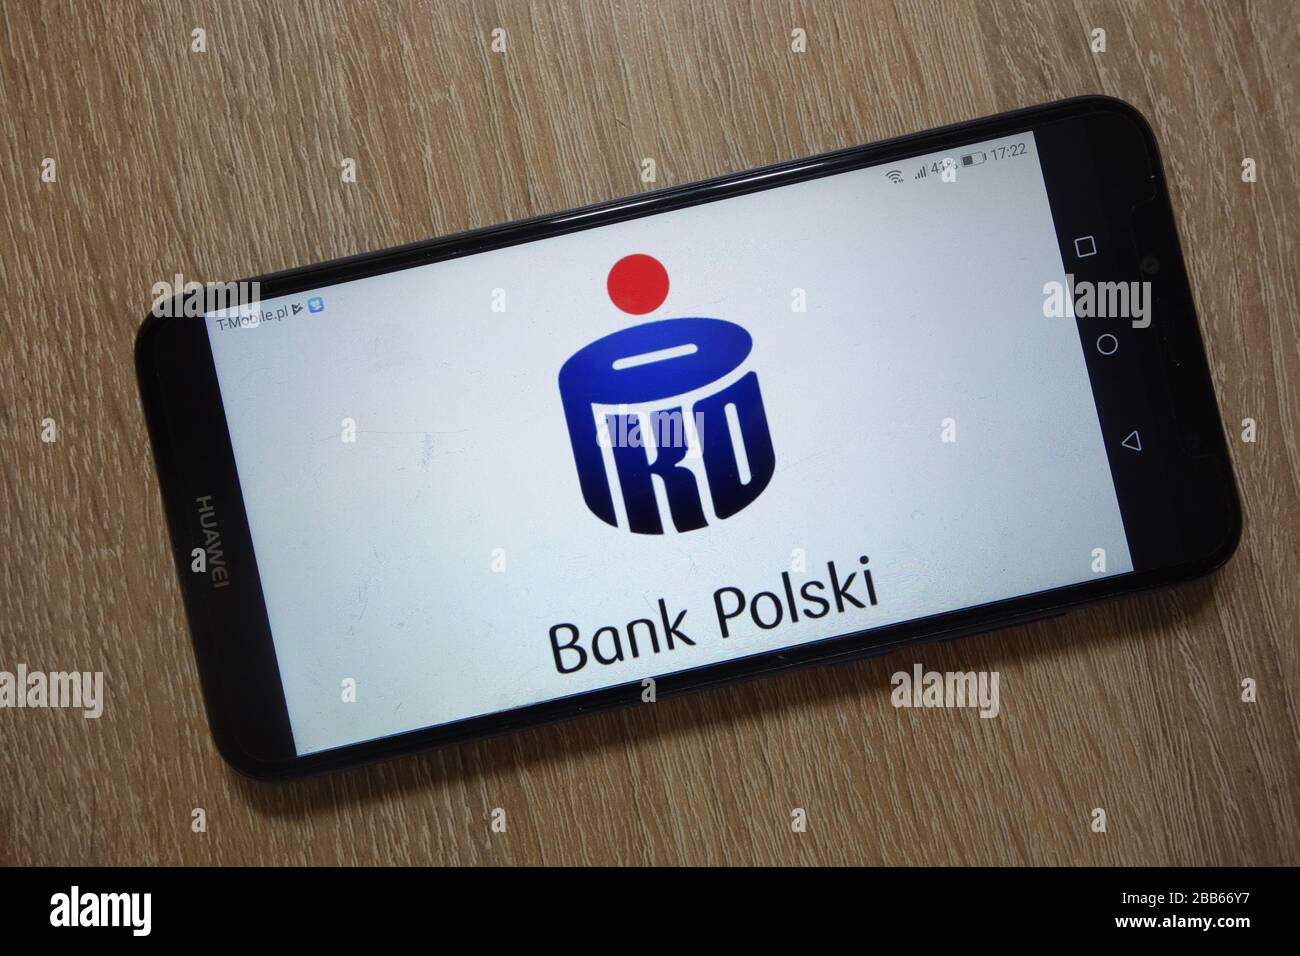 PKO Bank Polski logo displayed on smartphone Stock Photo